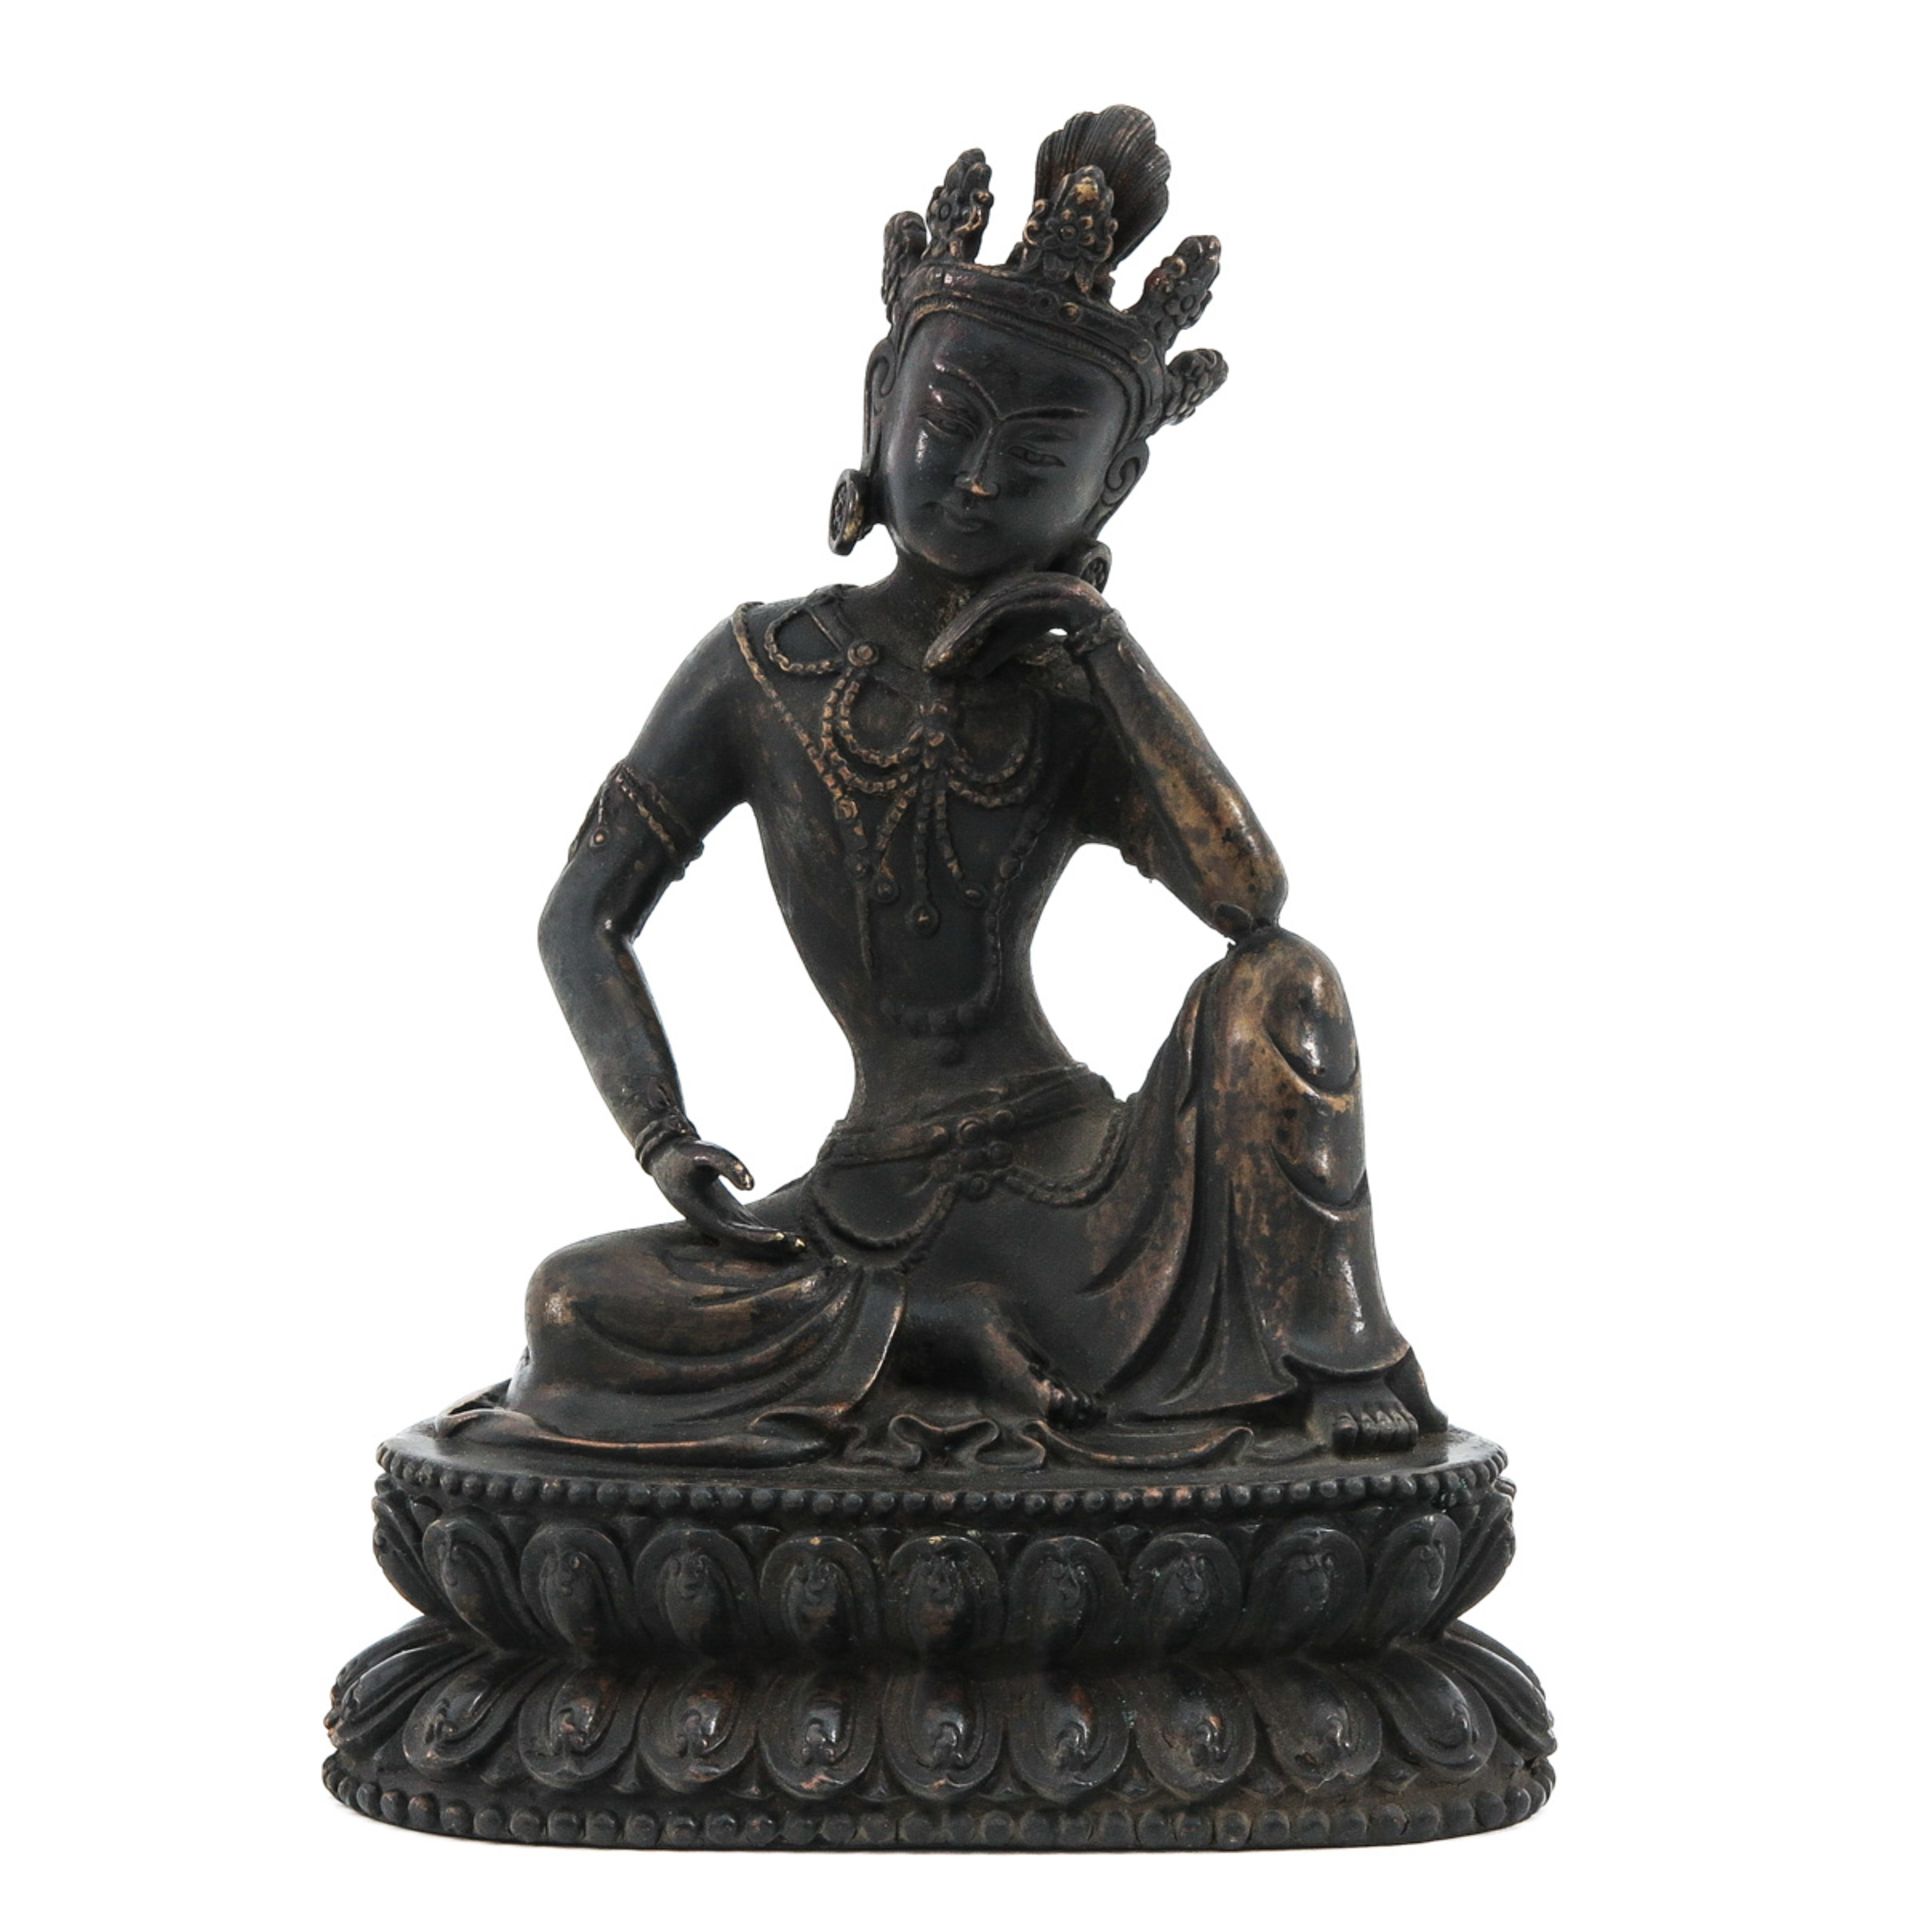 A Bronze Buddha